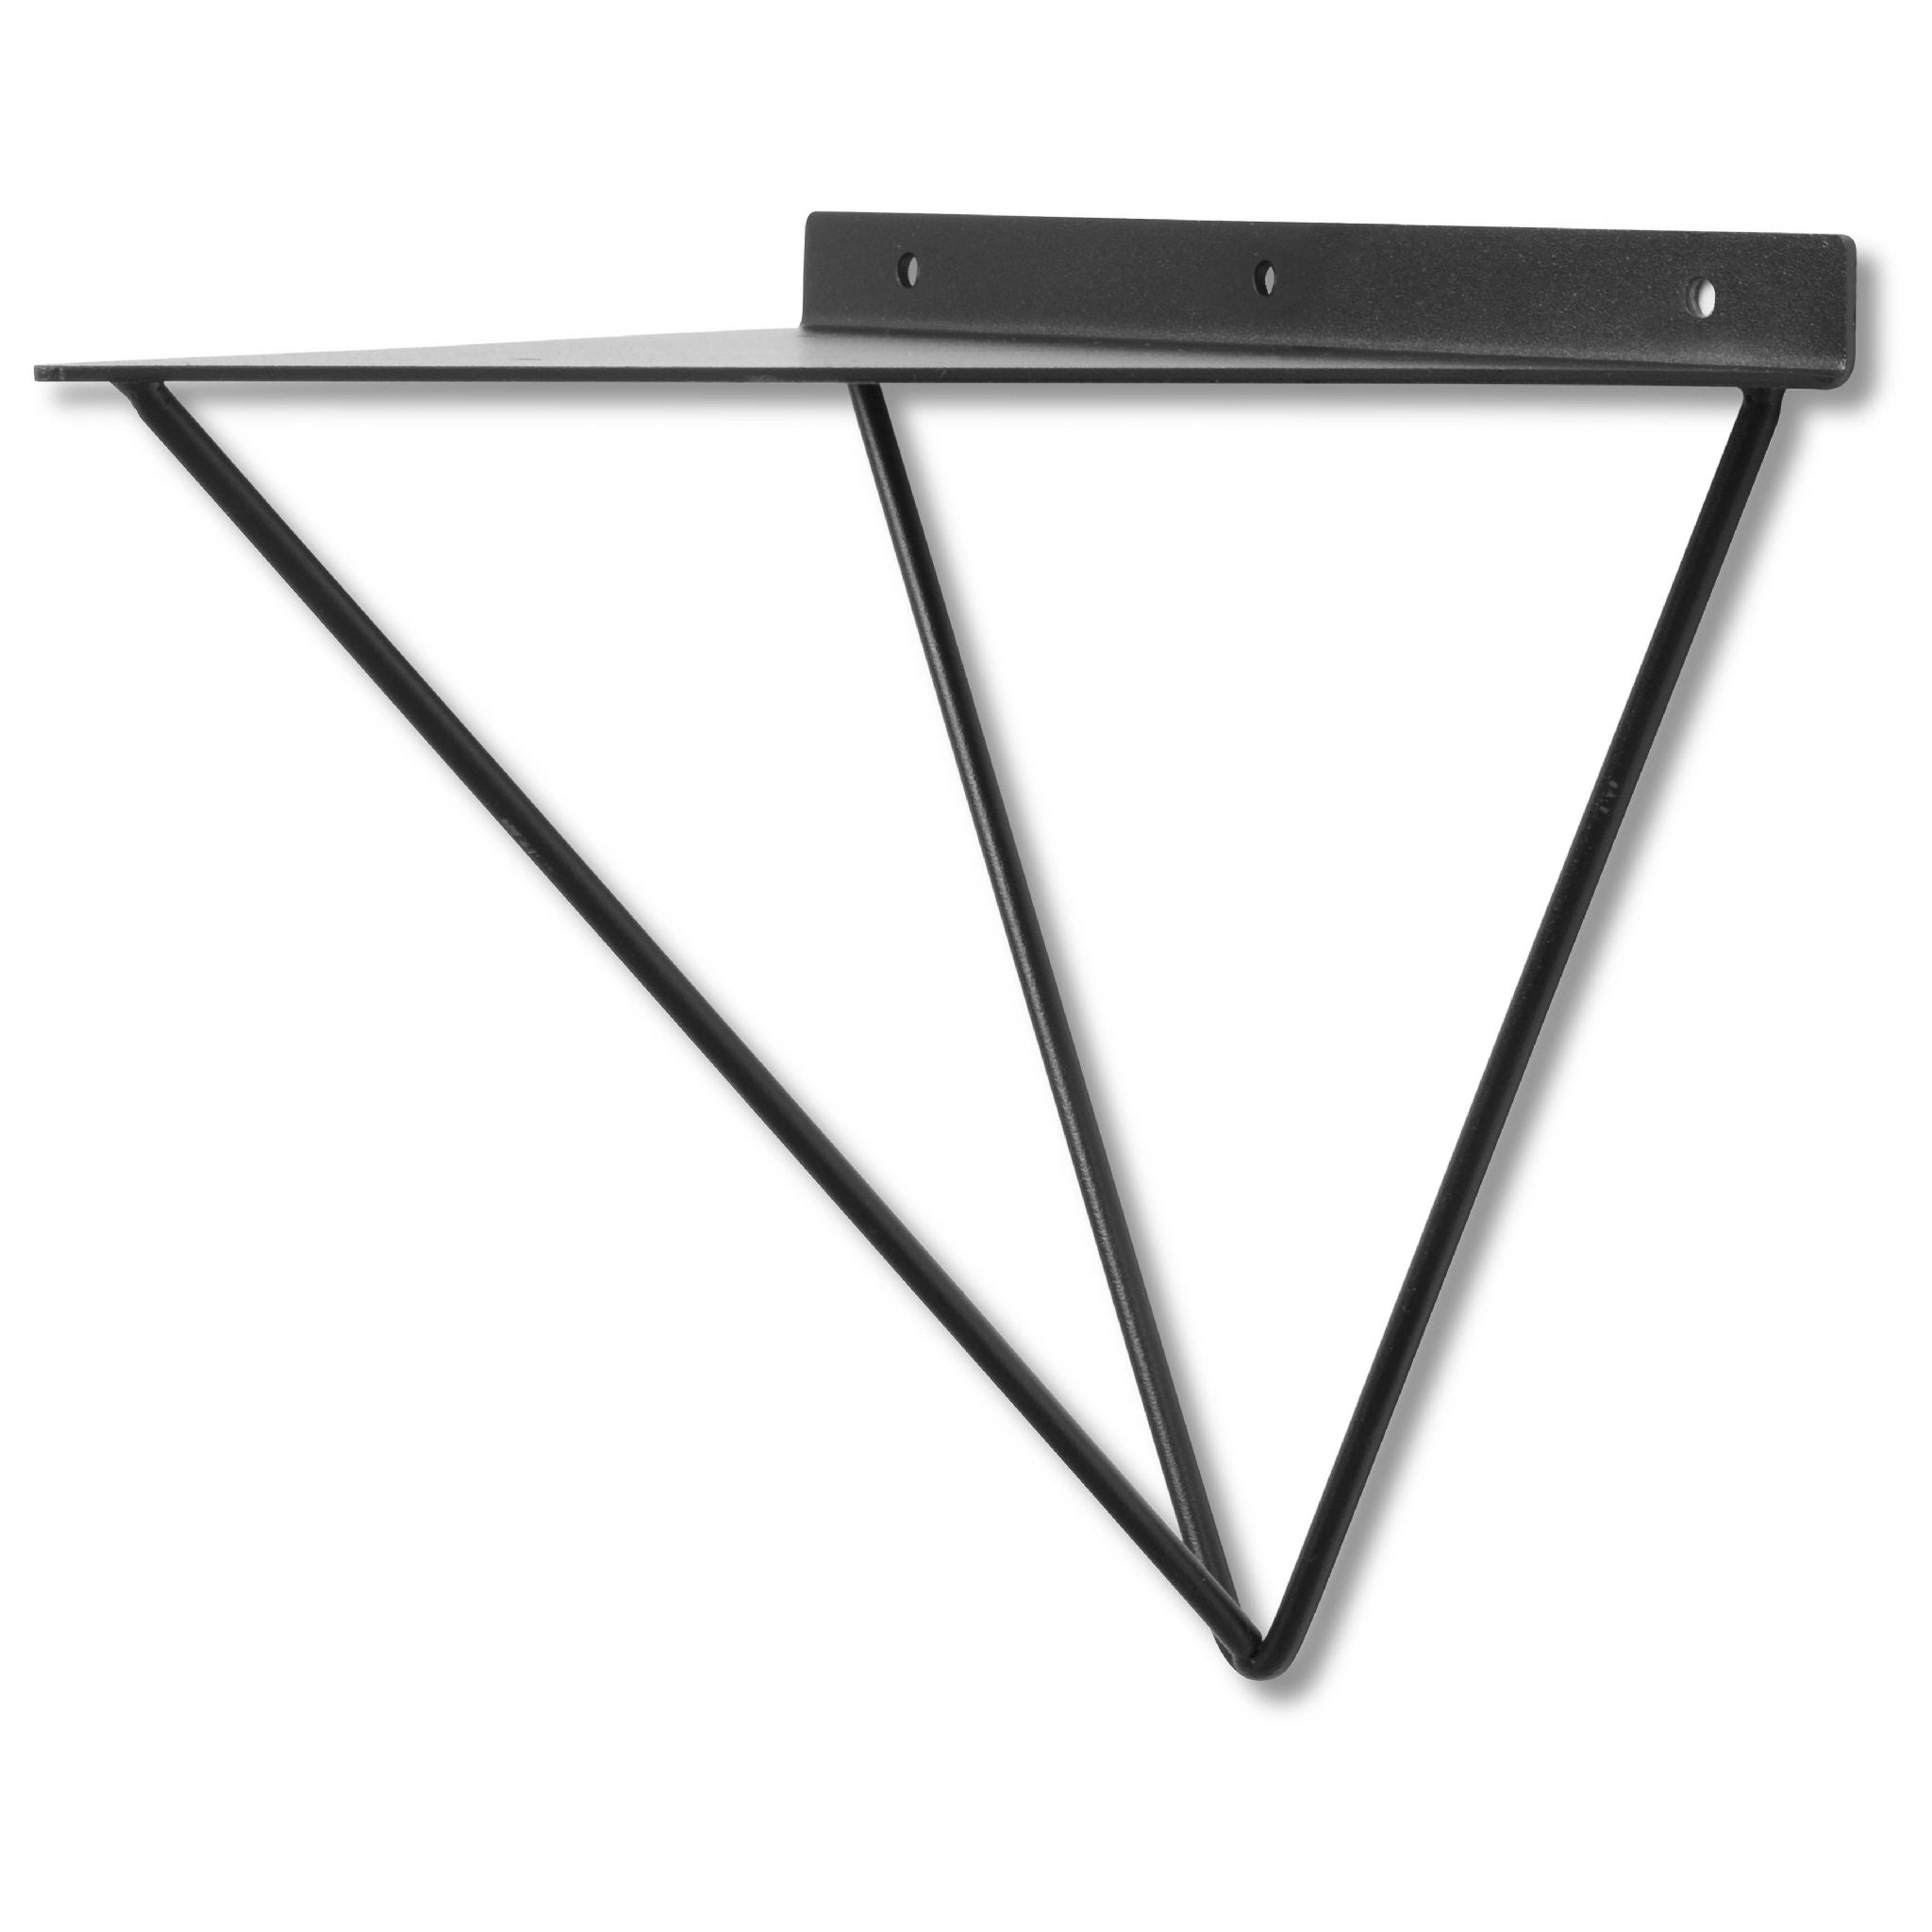 Bowes Solid Wood Shelf & Black Metal Brackets - 12x2 Smooth Shelf (29cmx4.5cm)